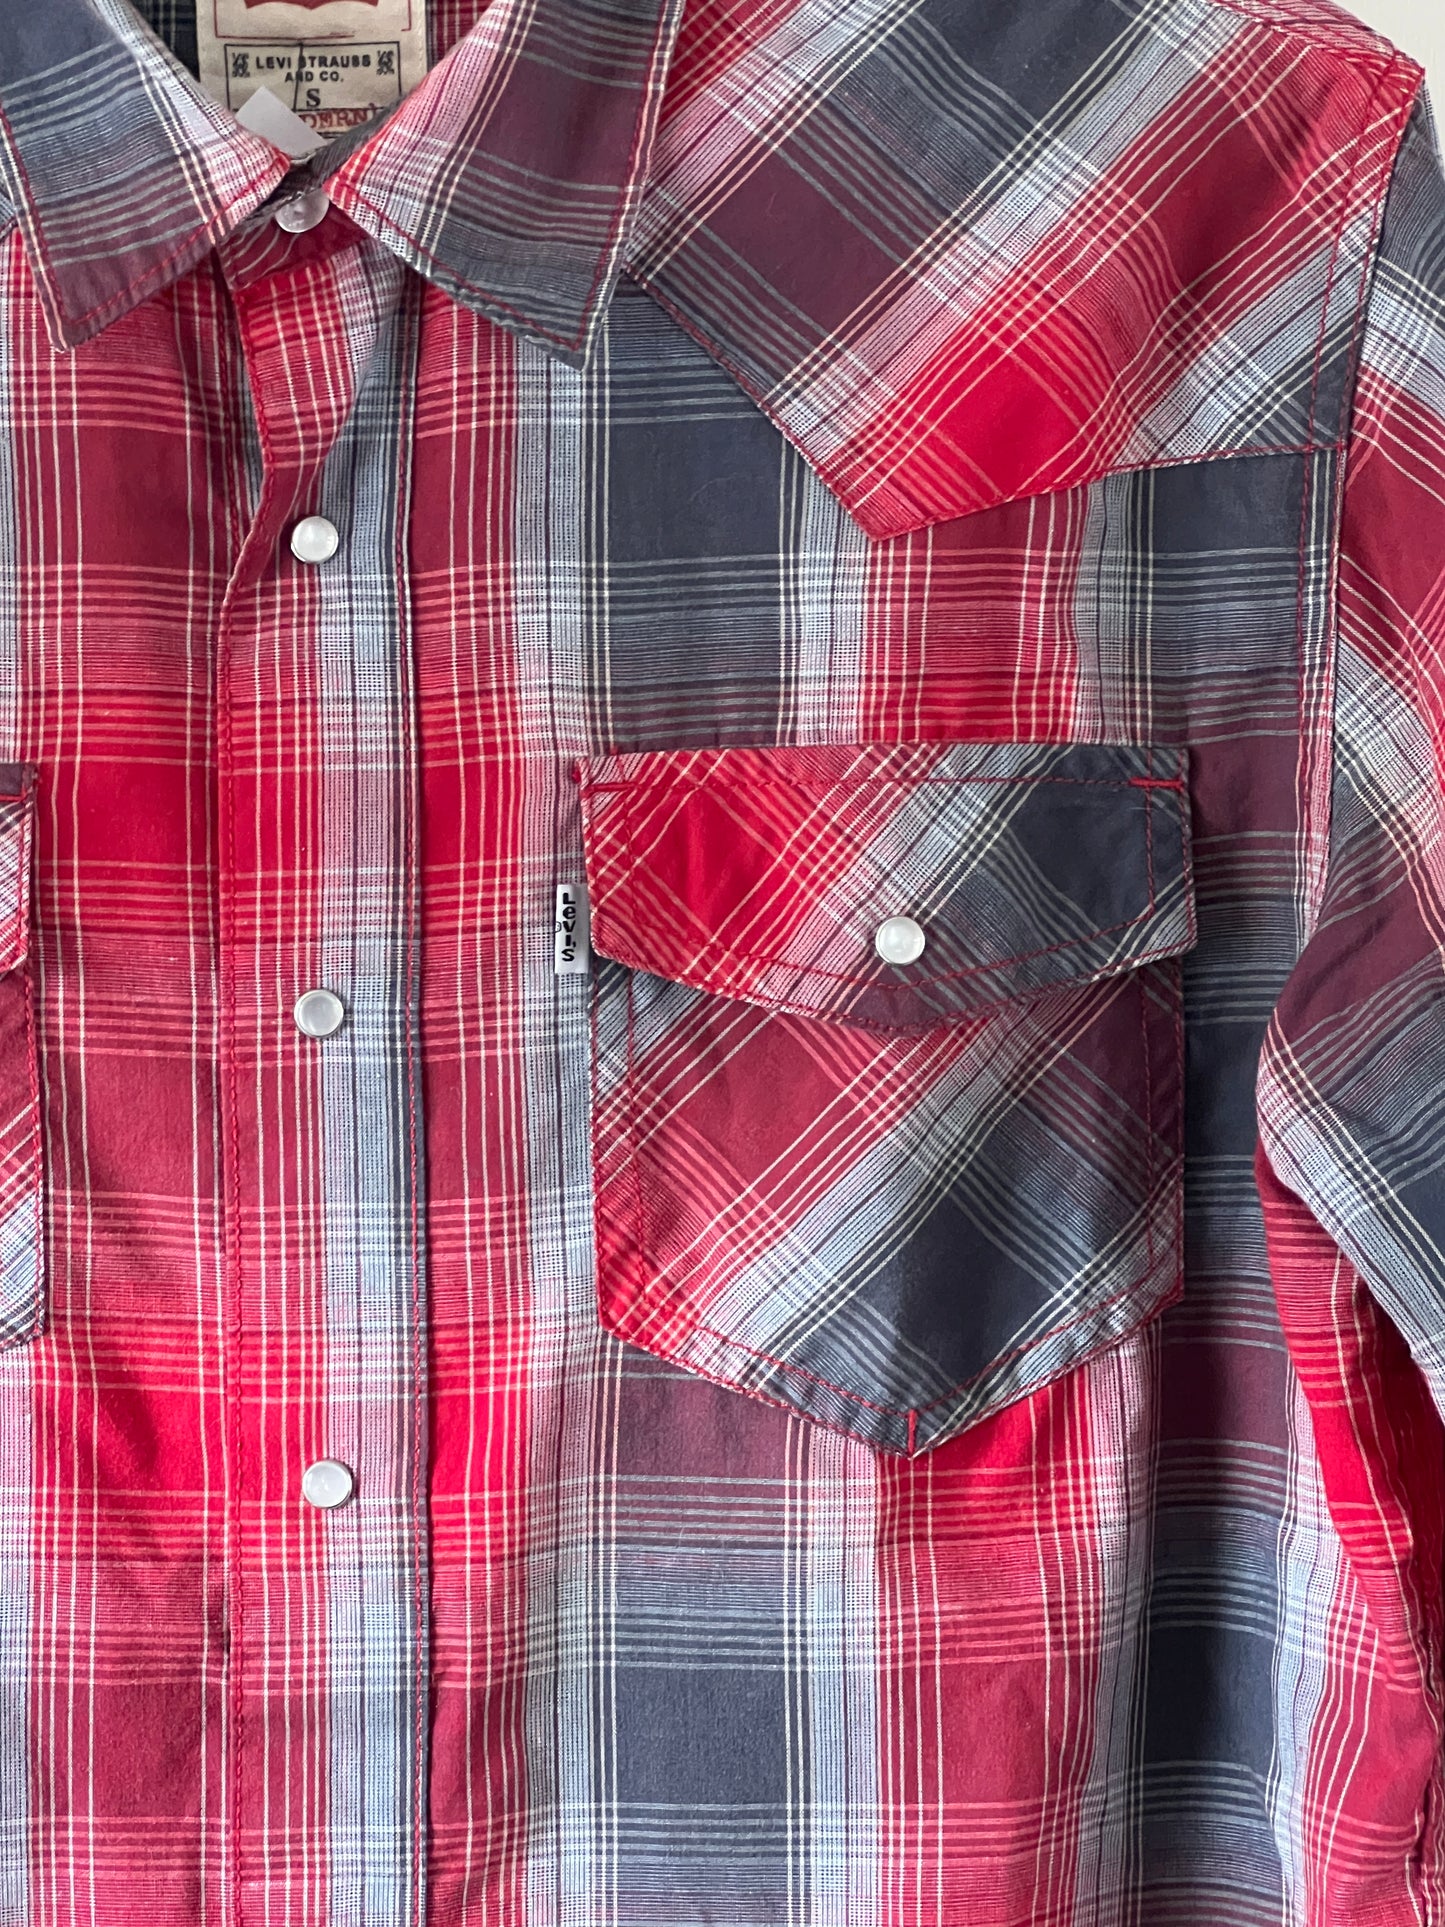 Vintage Levi’s Western long sleeve red grey plaid shirt